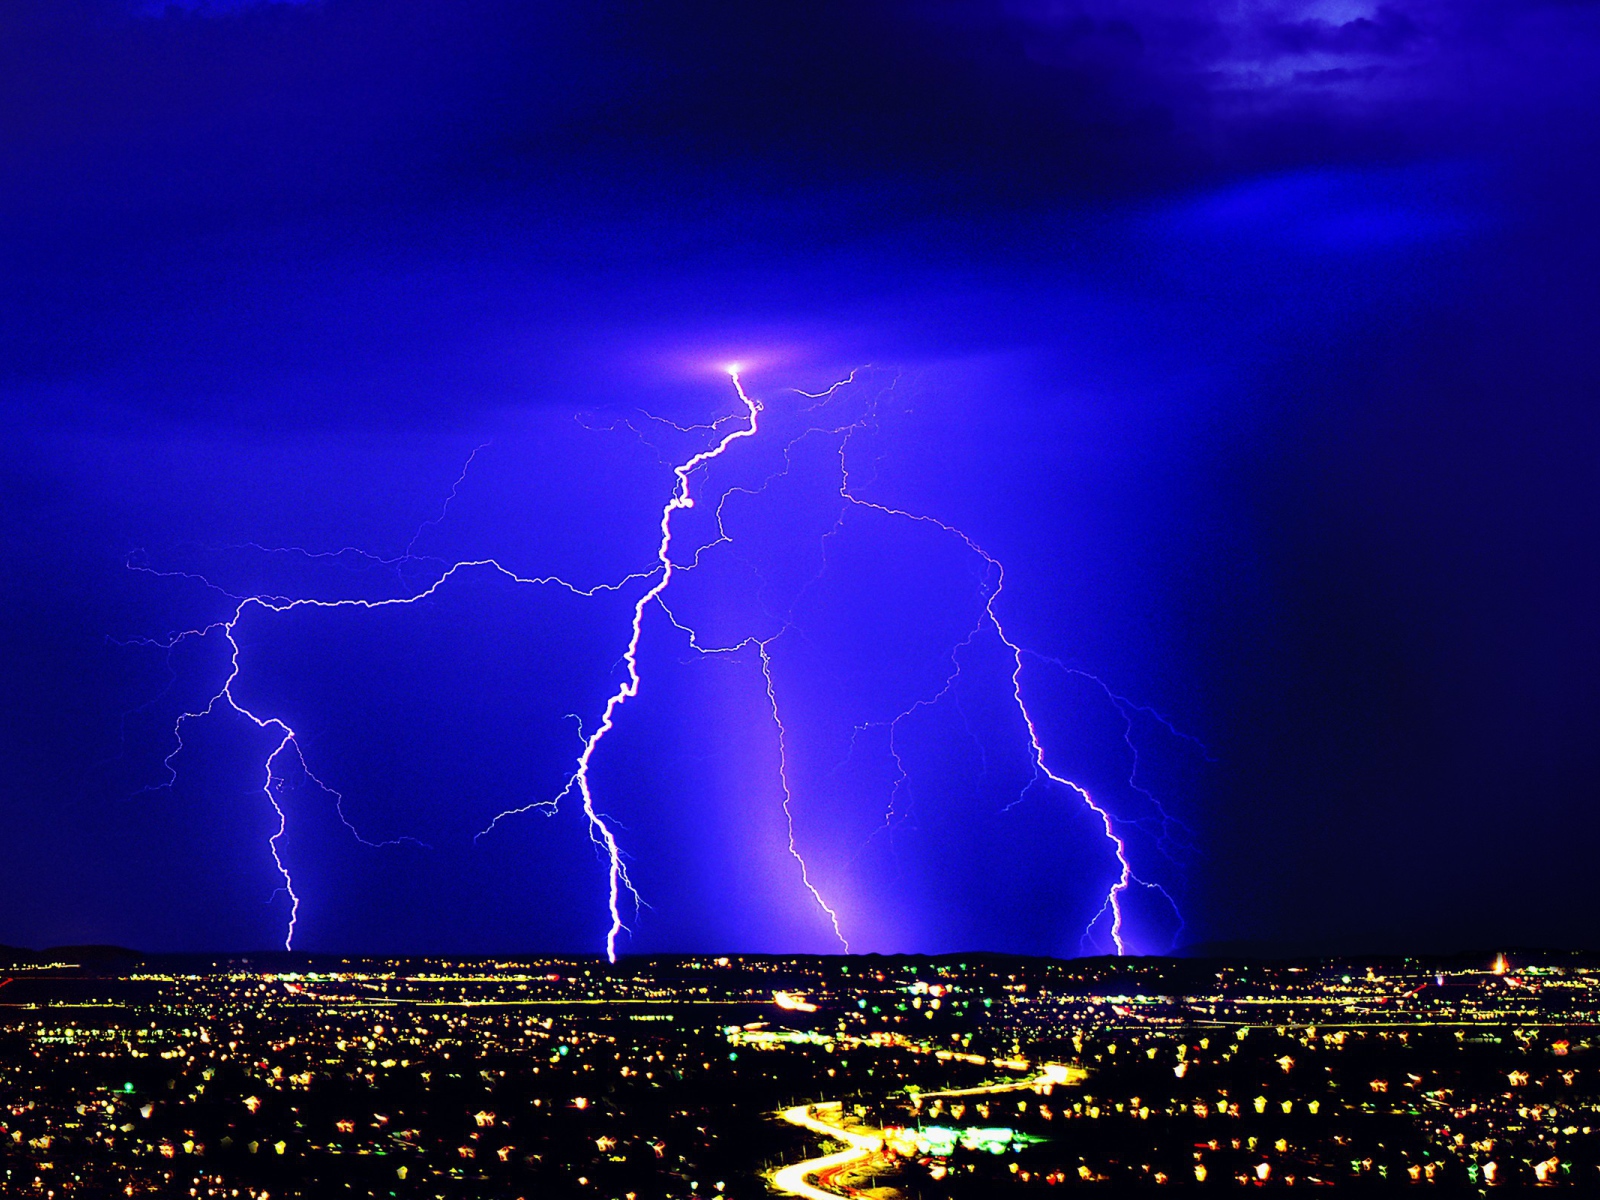 Lightning in a blue sky over night city